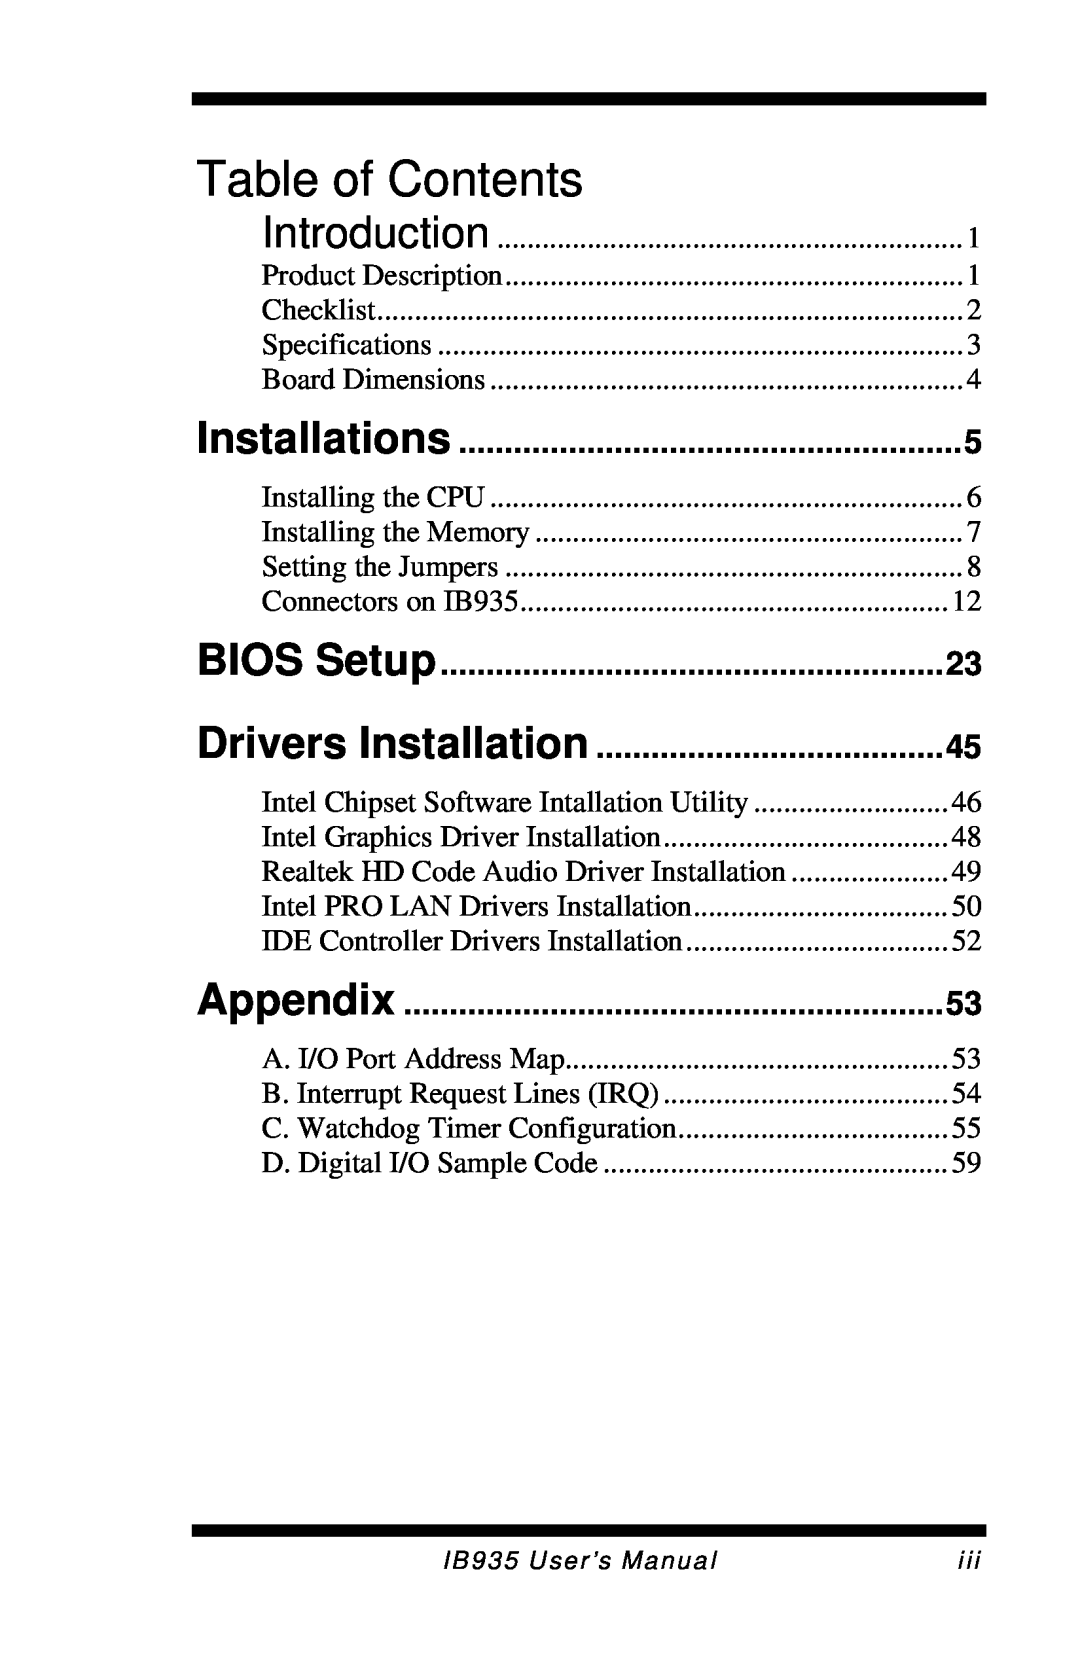 Intel IB935 Installations, BIOS Setup, Appendix, Introduction, Intel PRO LAN Drivers Installation, Table of Contents 